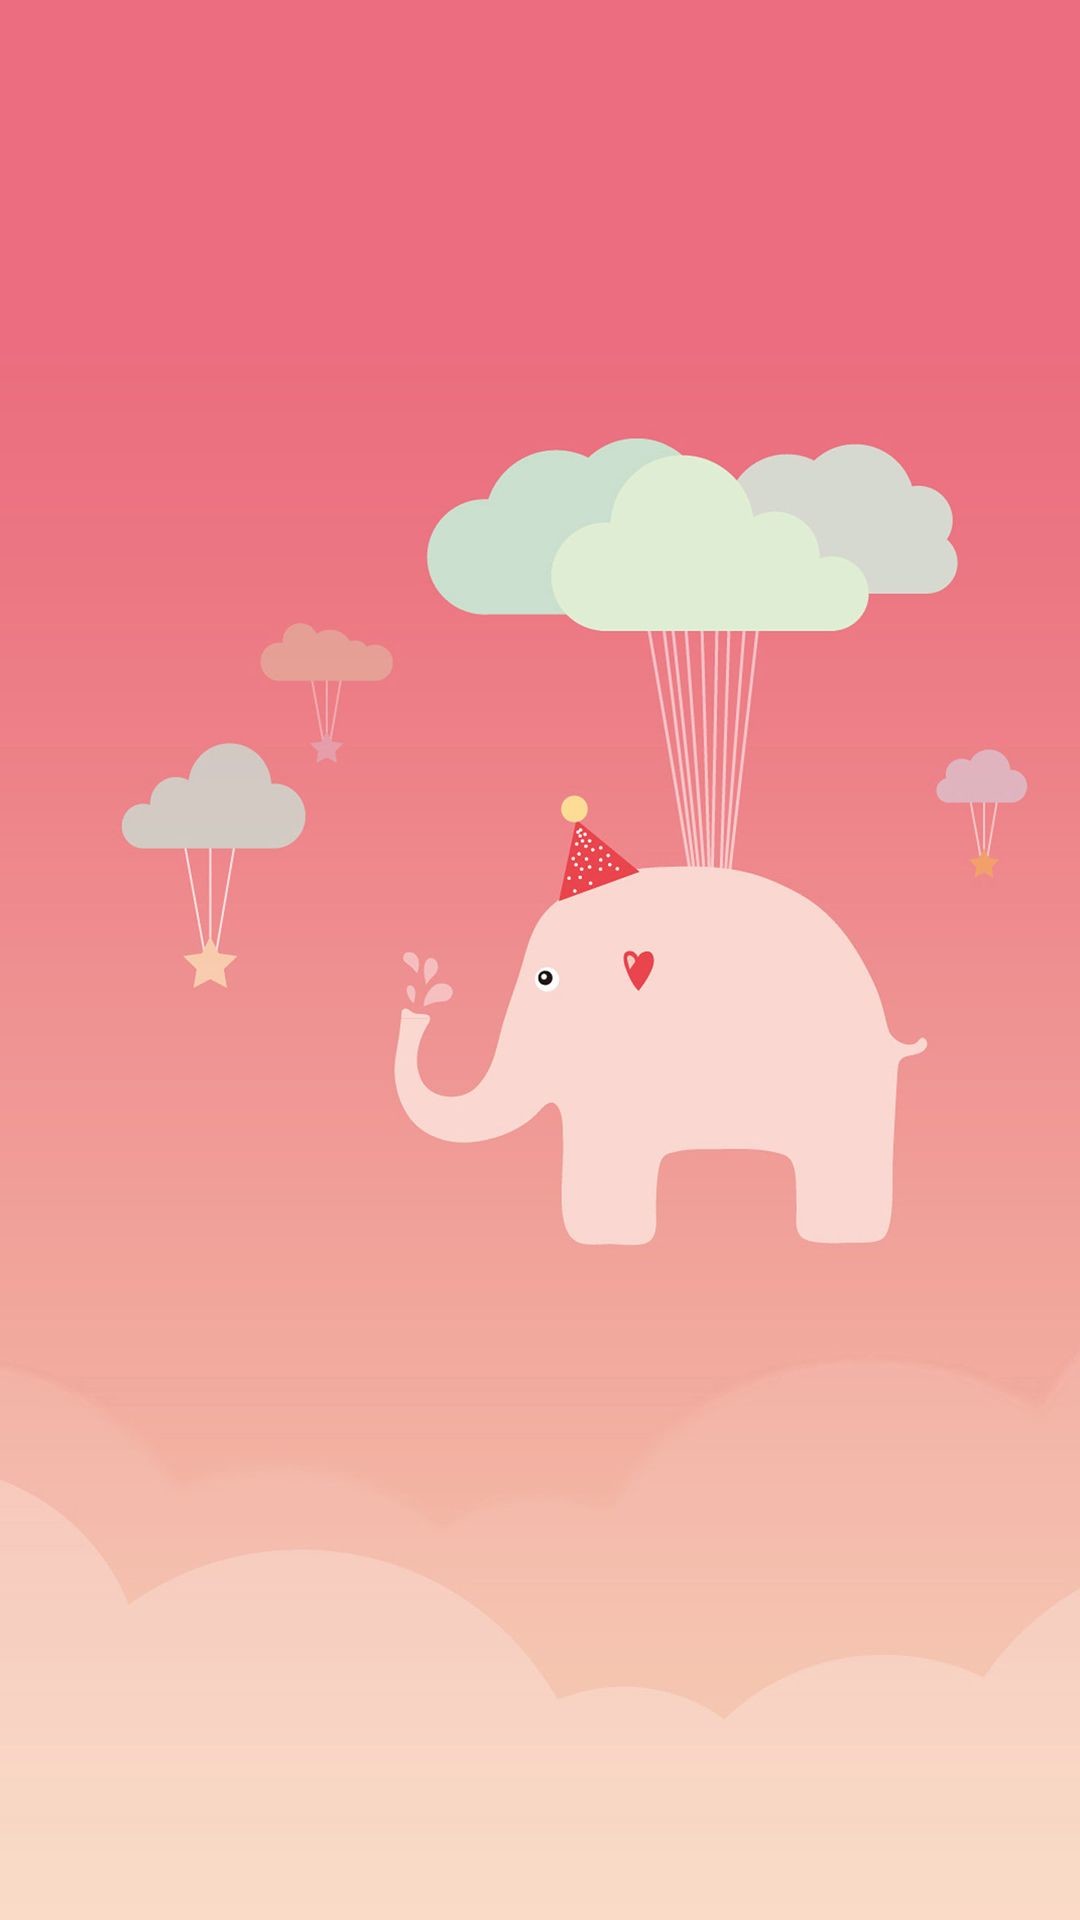 1080x1920 Cute Elephant iPhone 6 Wallpaper Download